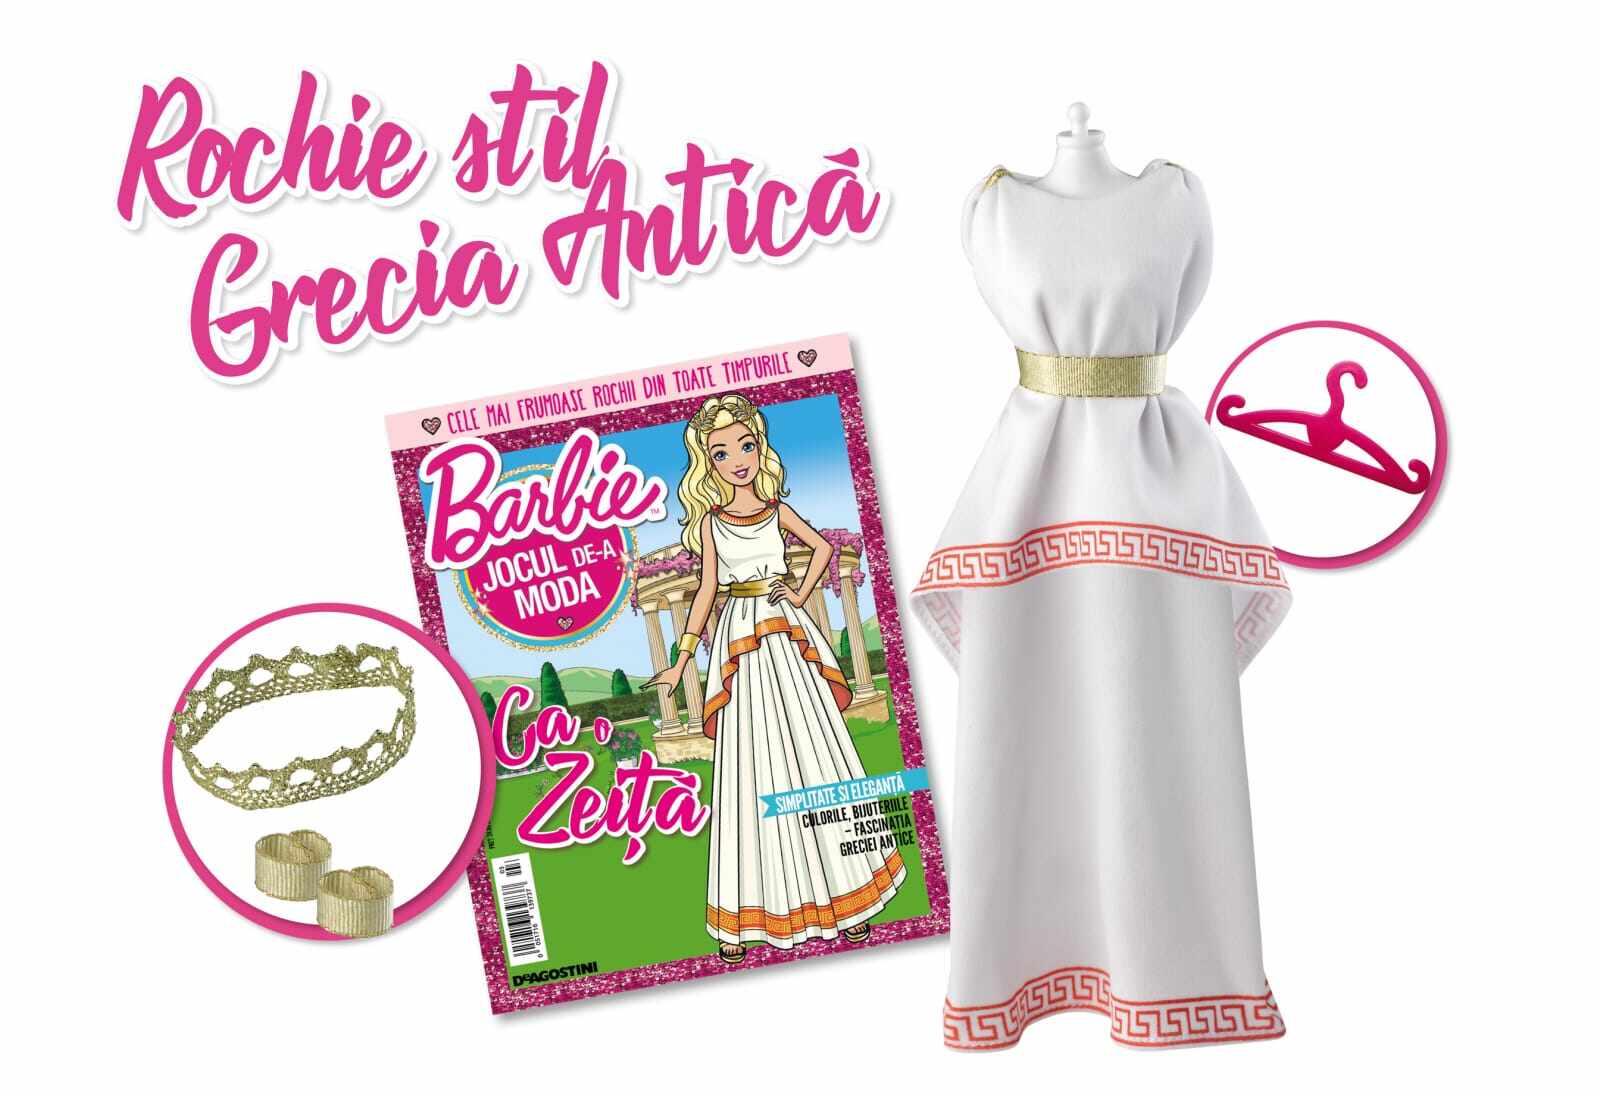 Colectia Barbie Jocul de-a Moda - Nr. 03 - Rochie stil Grecia Antica, DeAgostini, 2-3 ani +